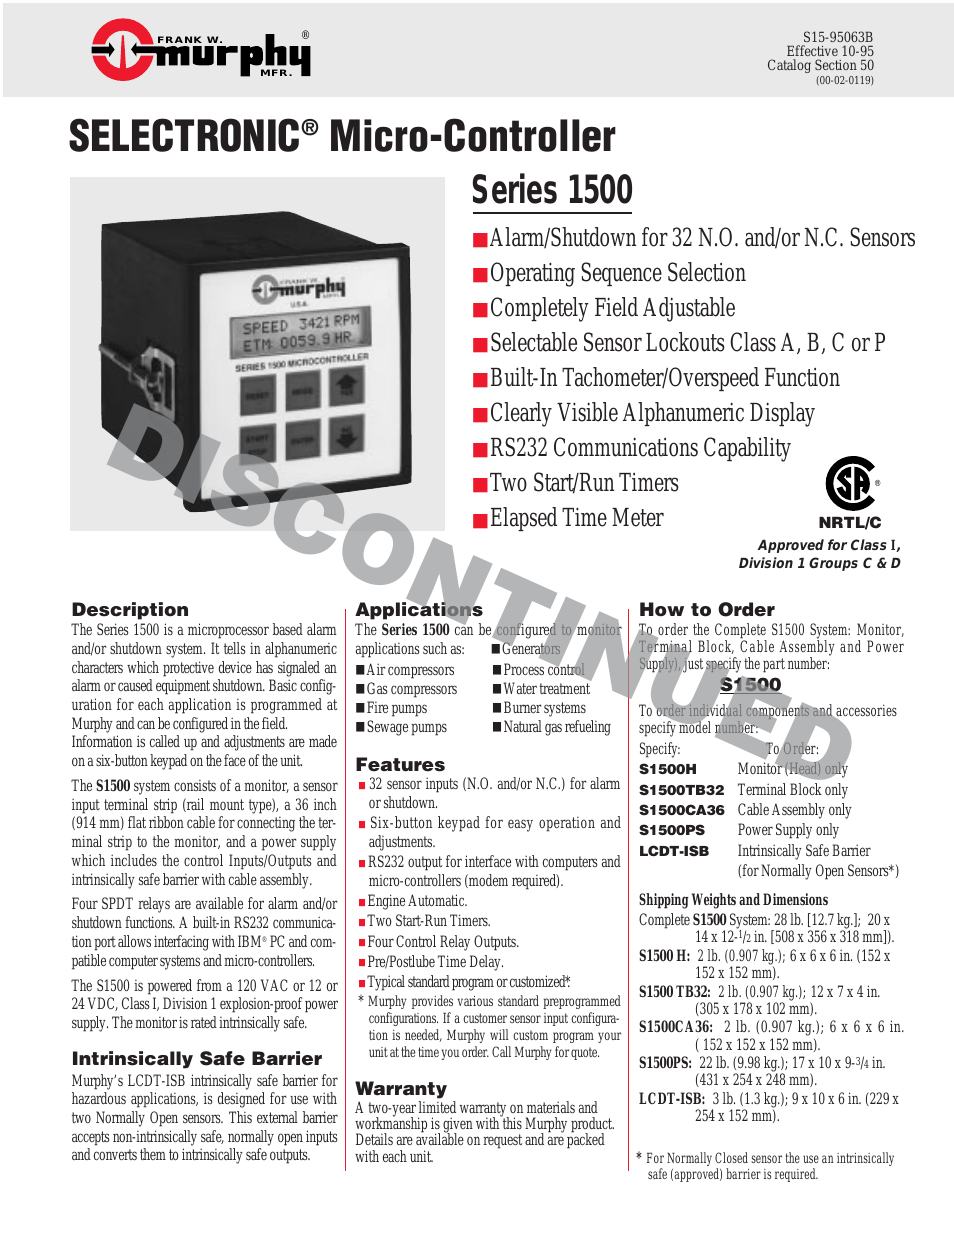 Selectronic Micro-Controller Series 1500